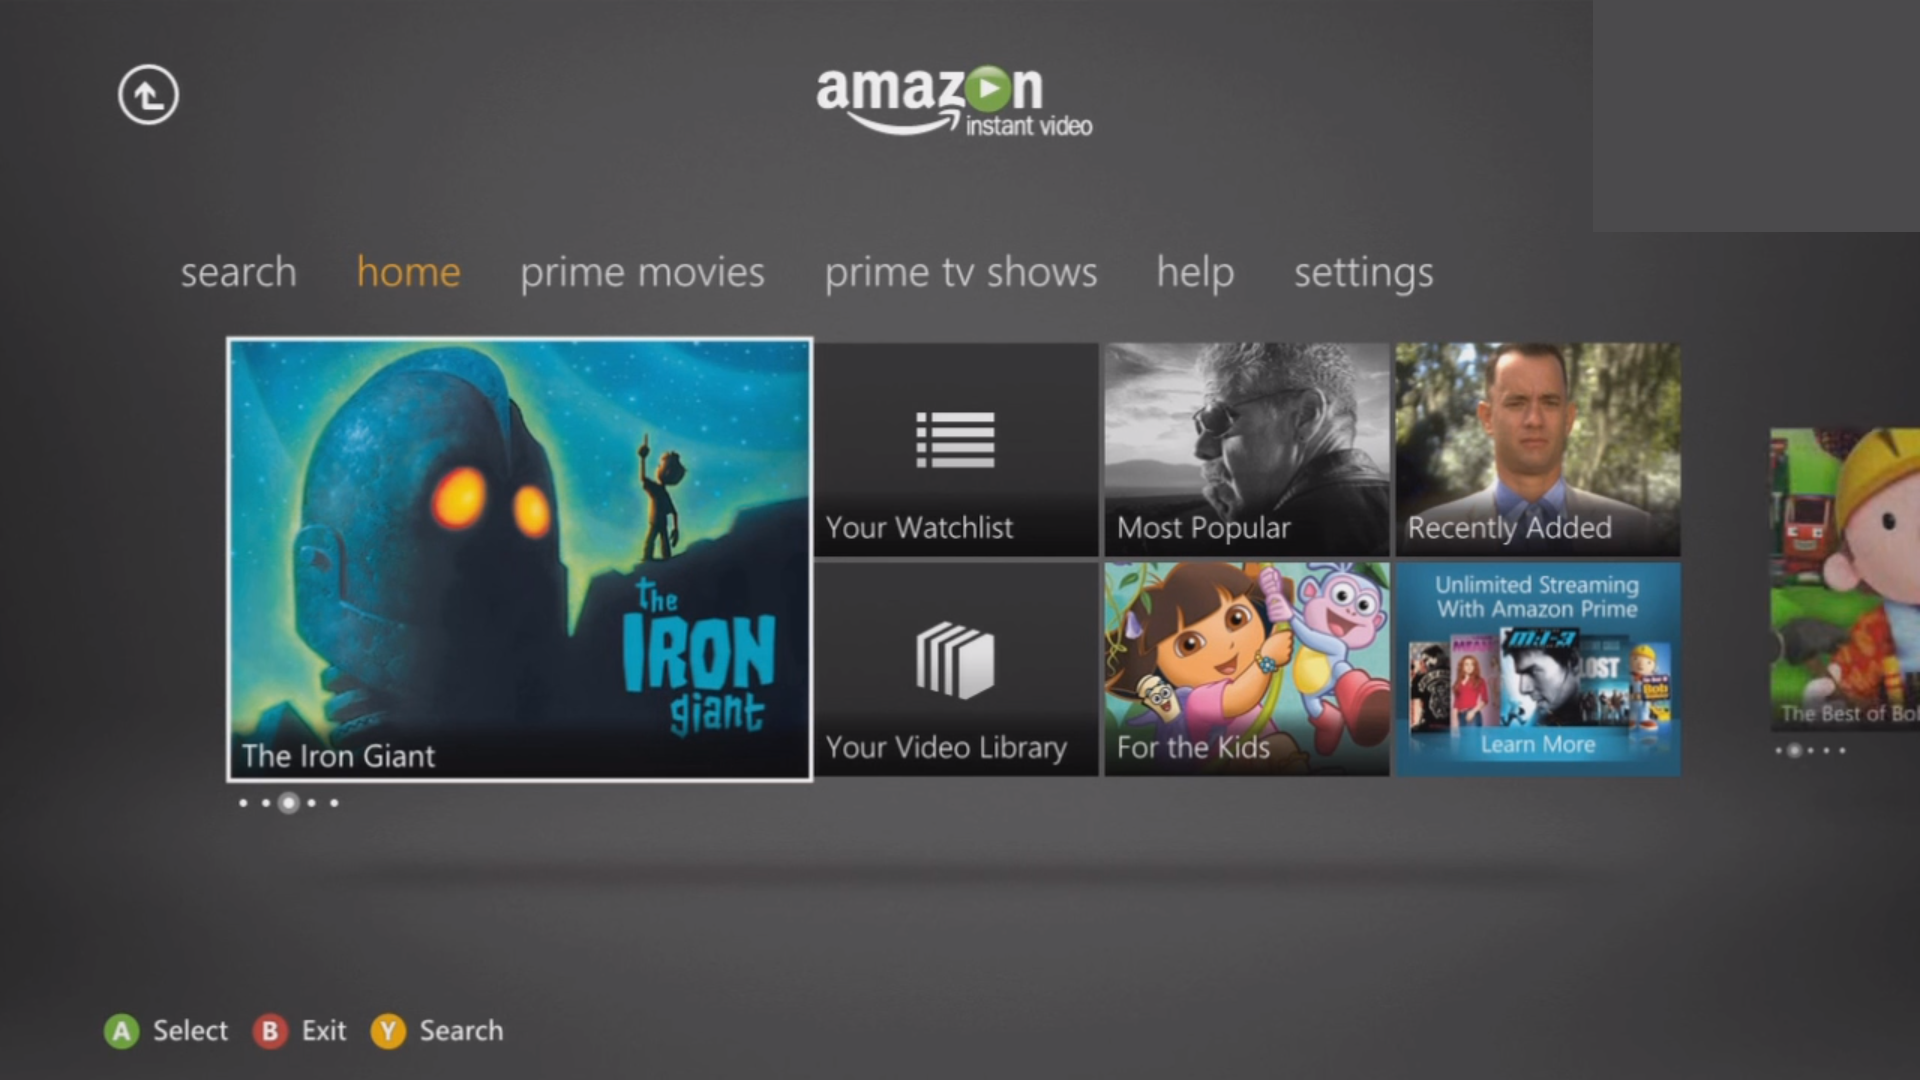 Amazon Video home screen